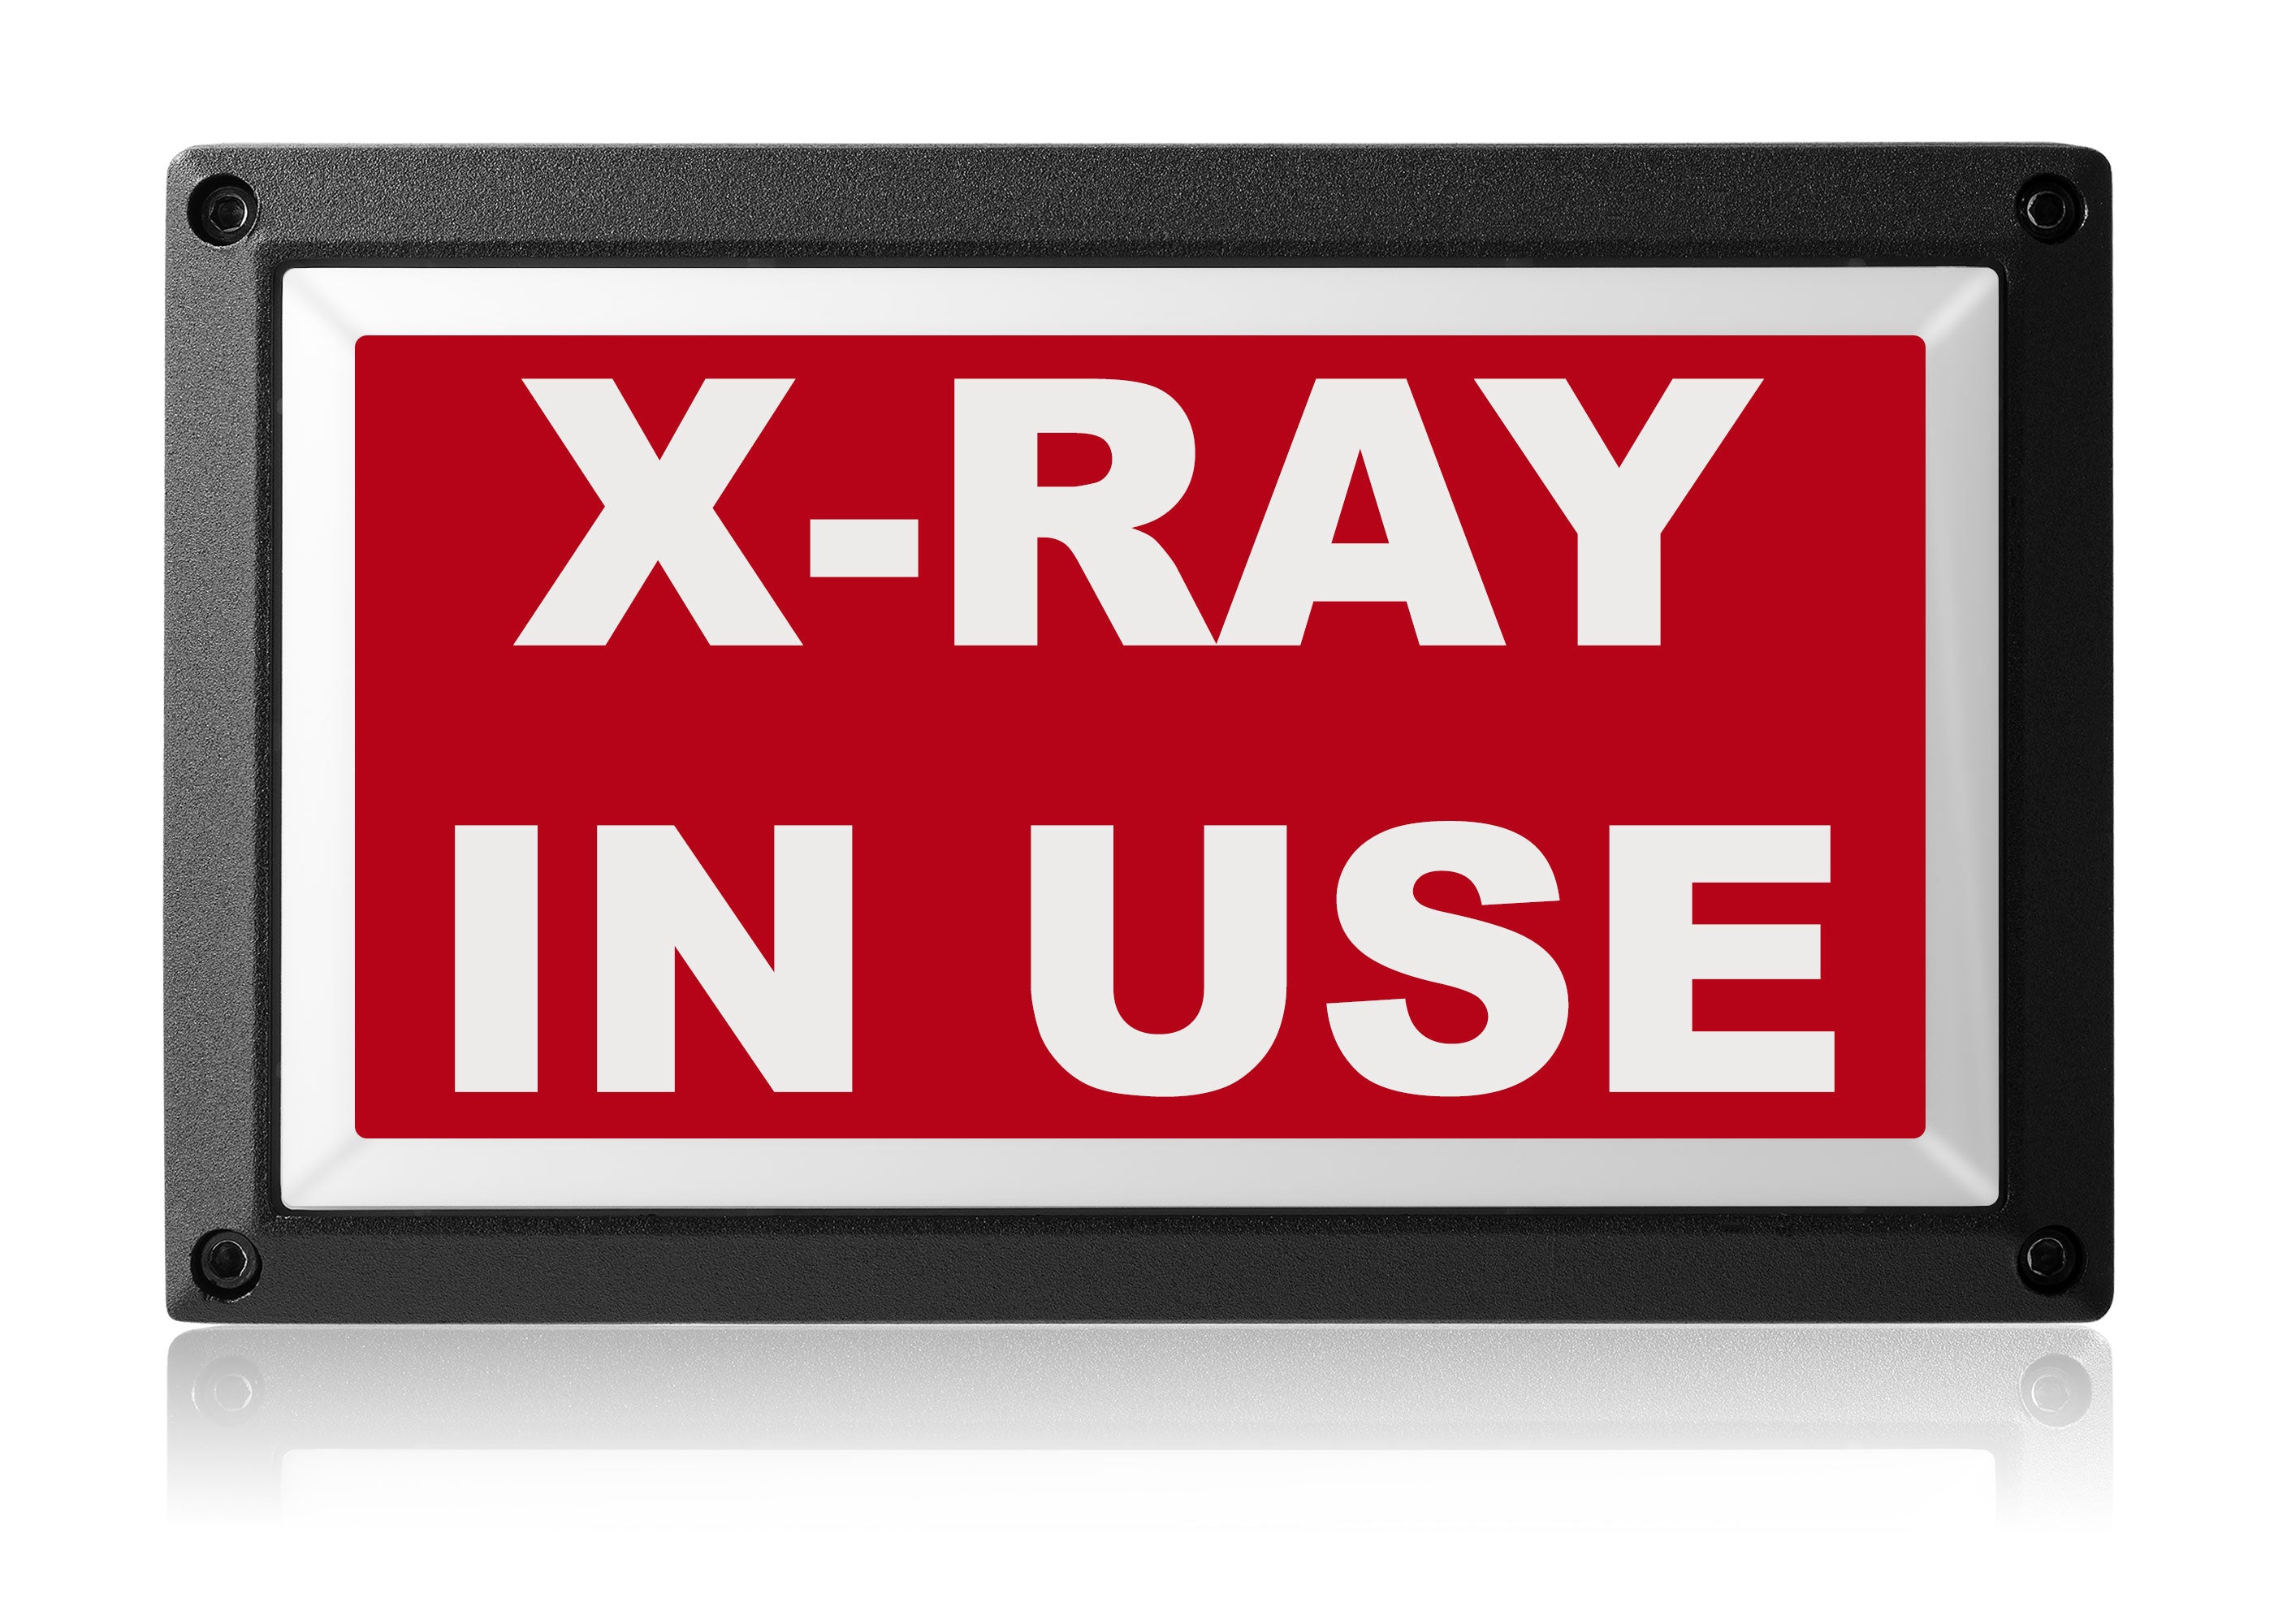 X-Ray In Use Light - Rekall Dynamics LED Warning Sign